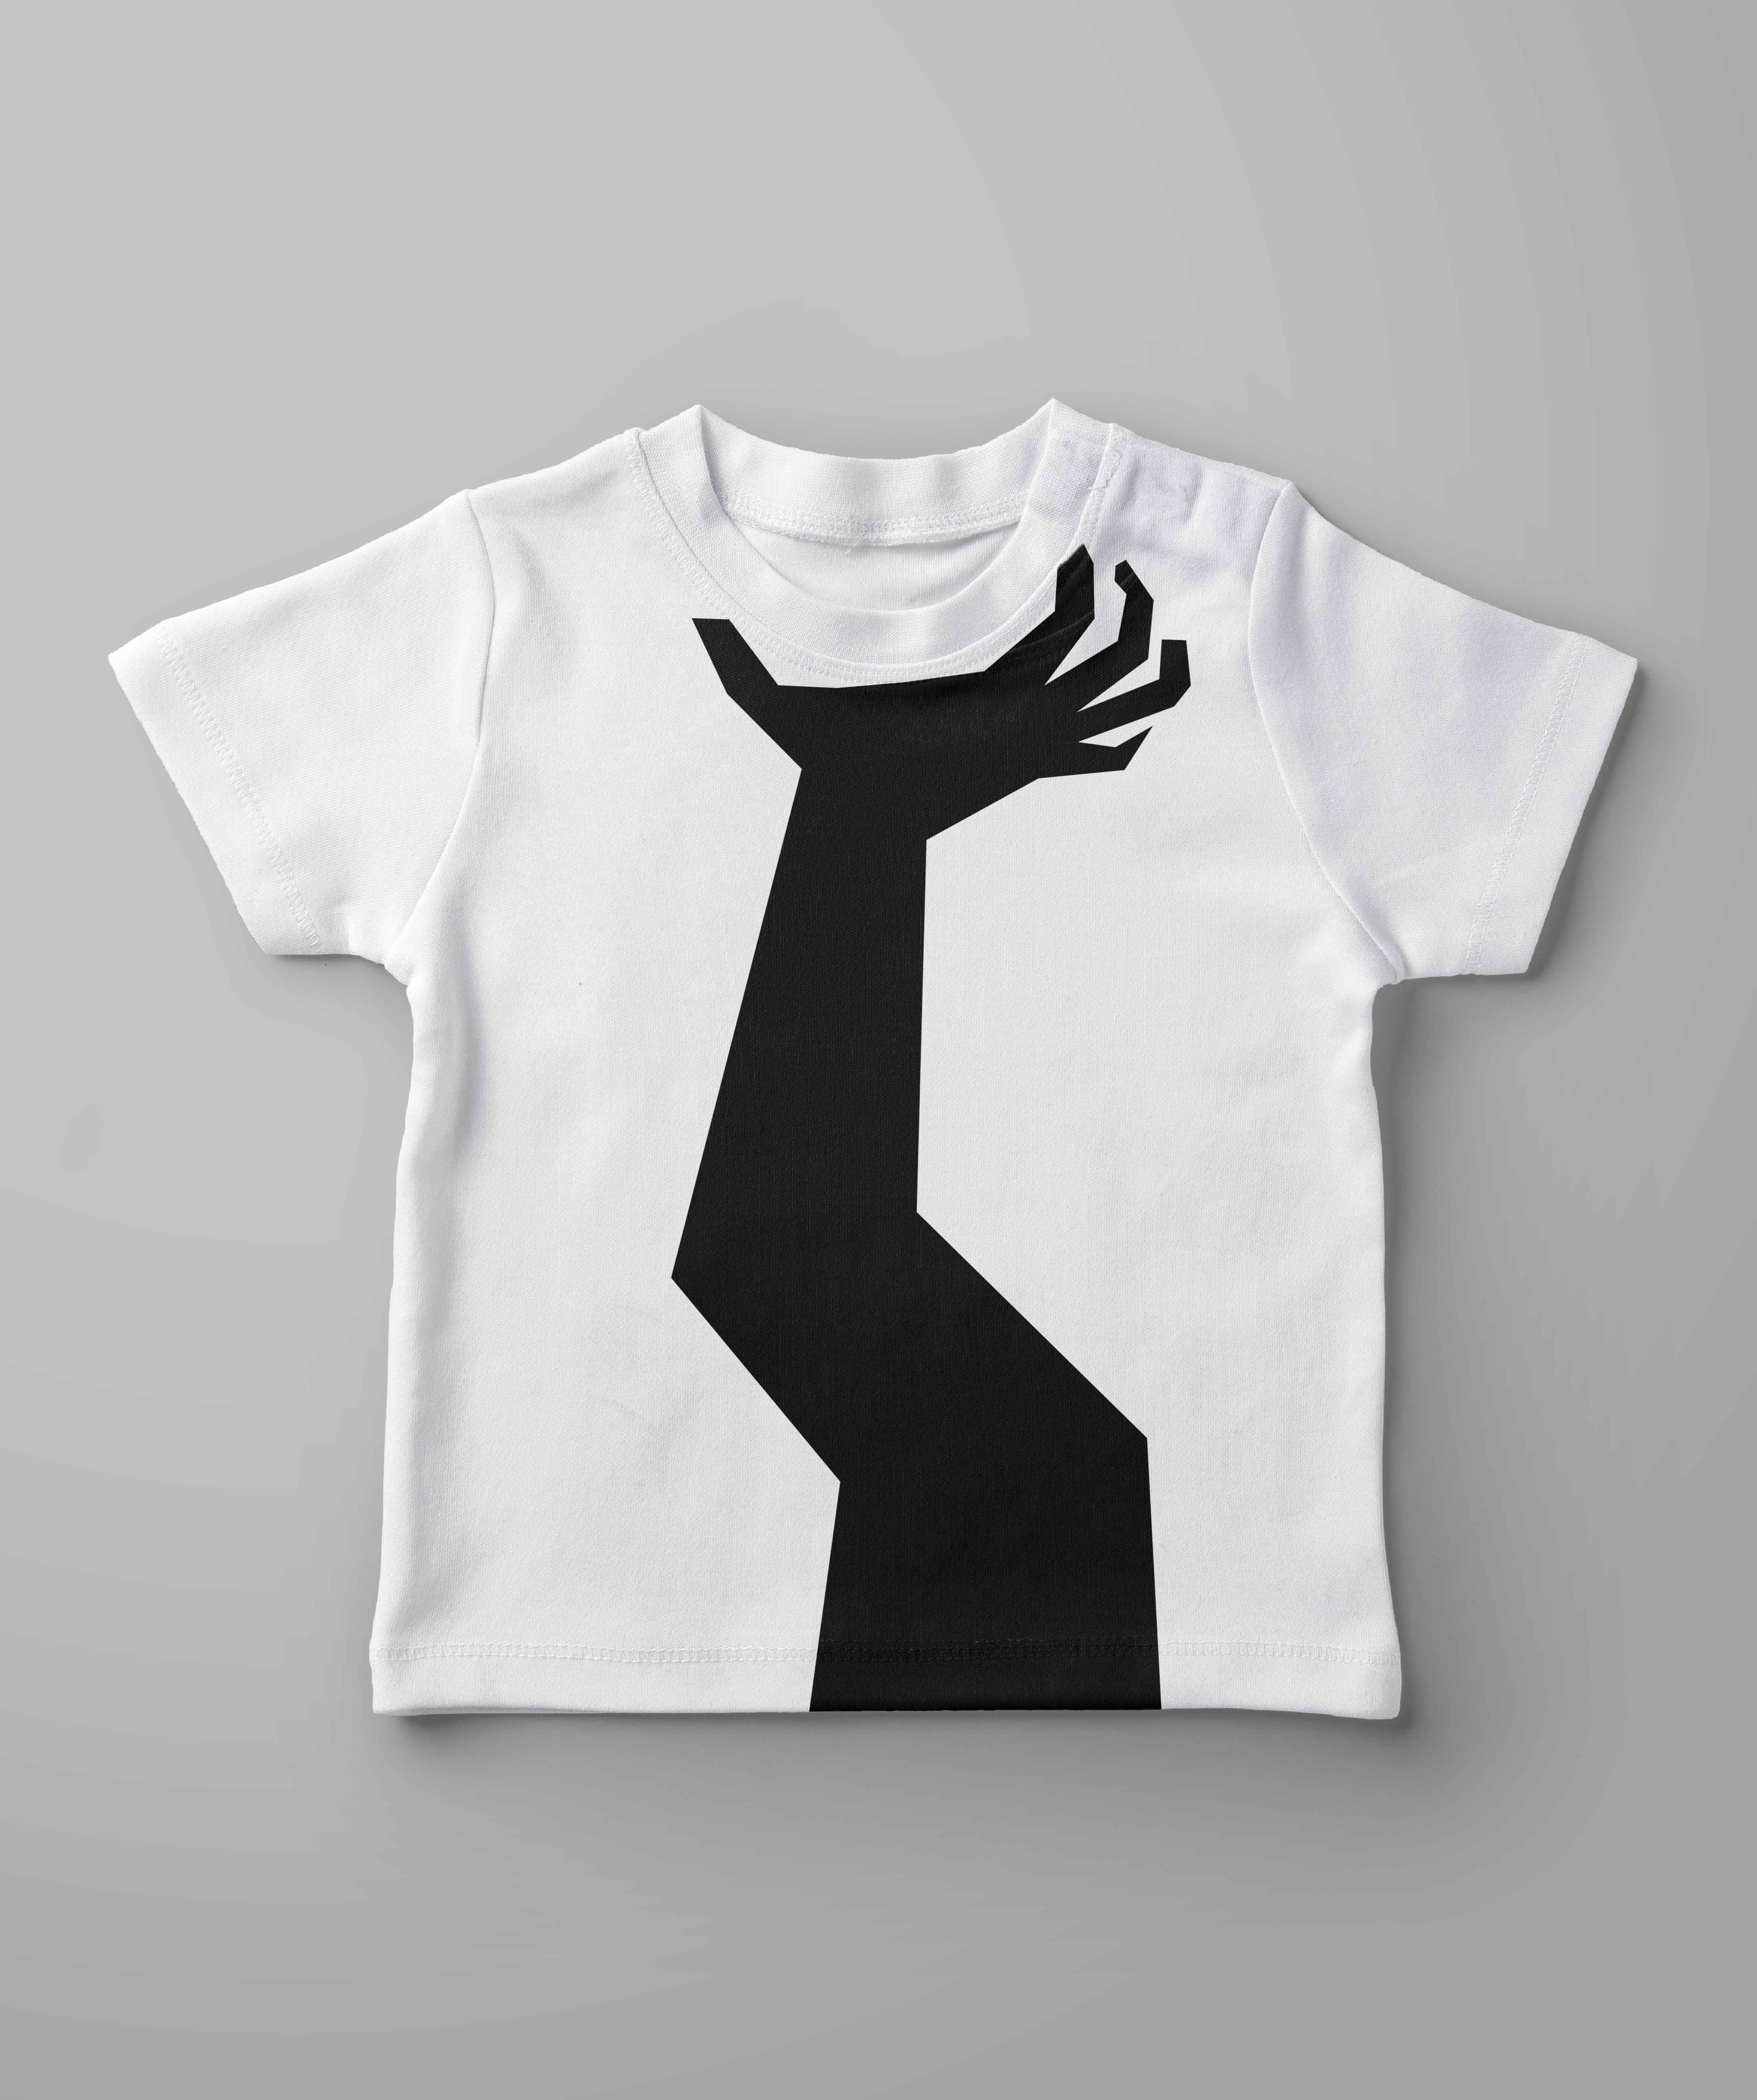 UrGear | UrGear Kids White Hand Printed Cotton T-Shirt